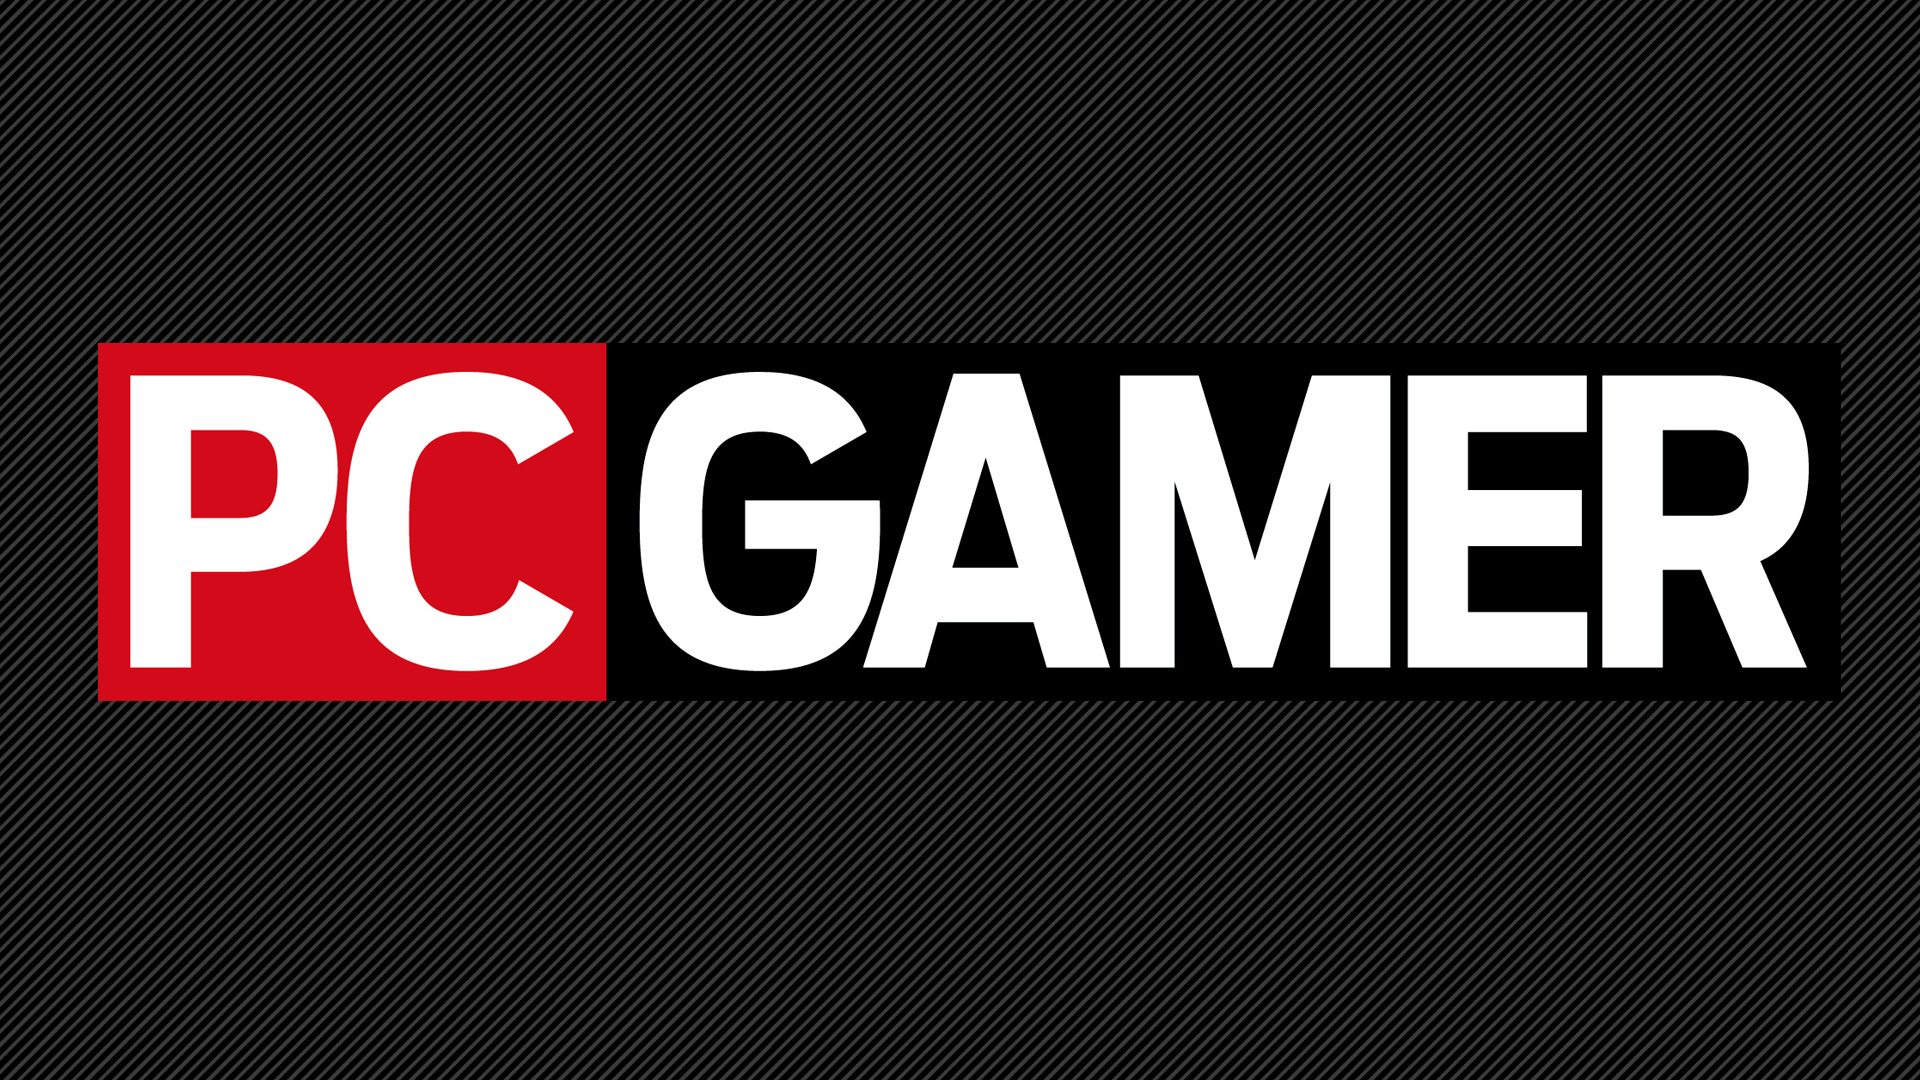 Da game текст. Геймер надпись. Логотип PC. Gamer логотип. Логотип с надписью BGAMERZ.